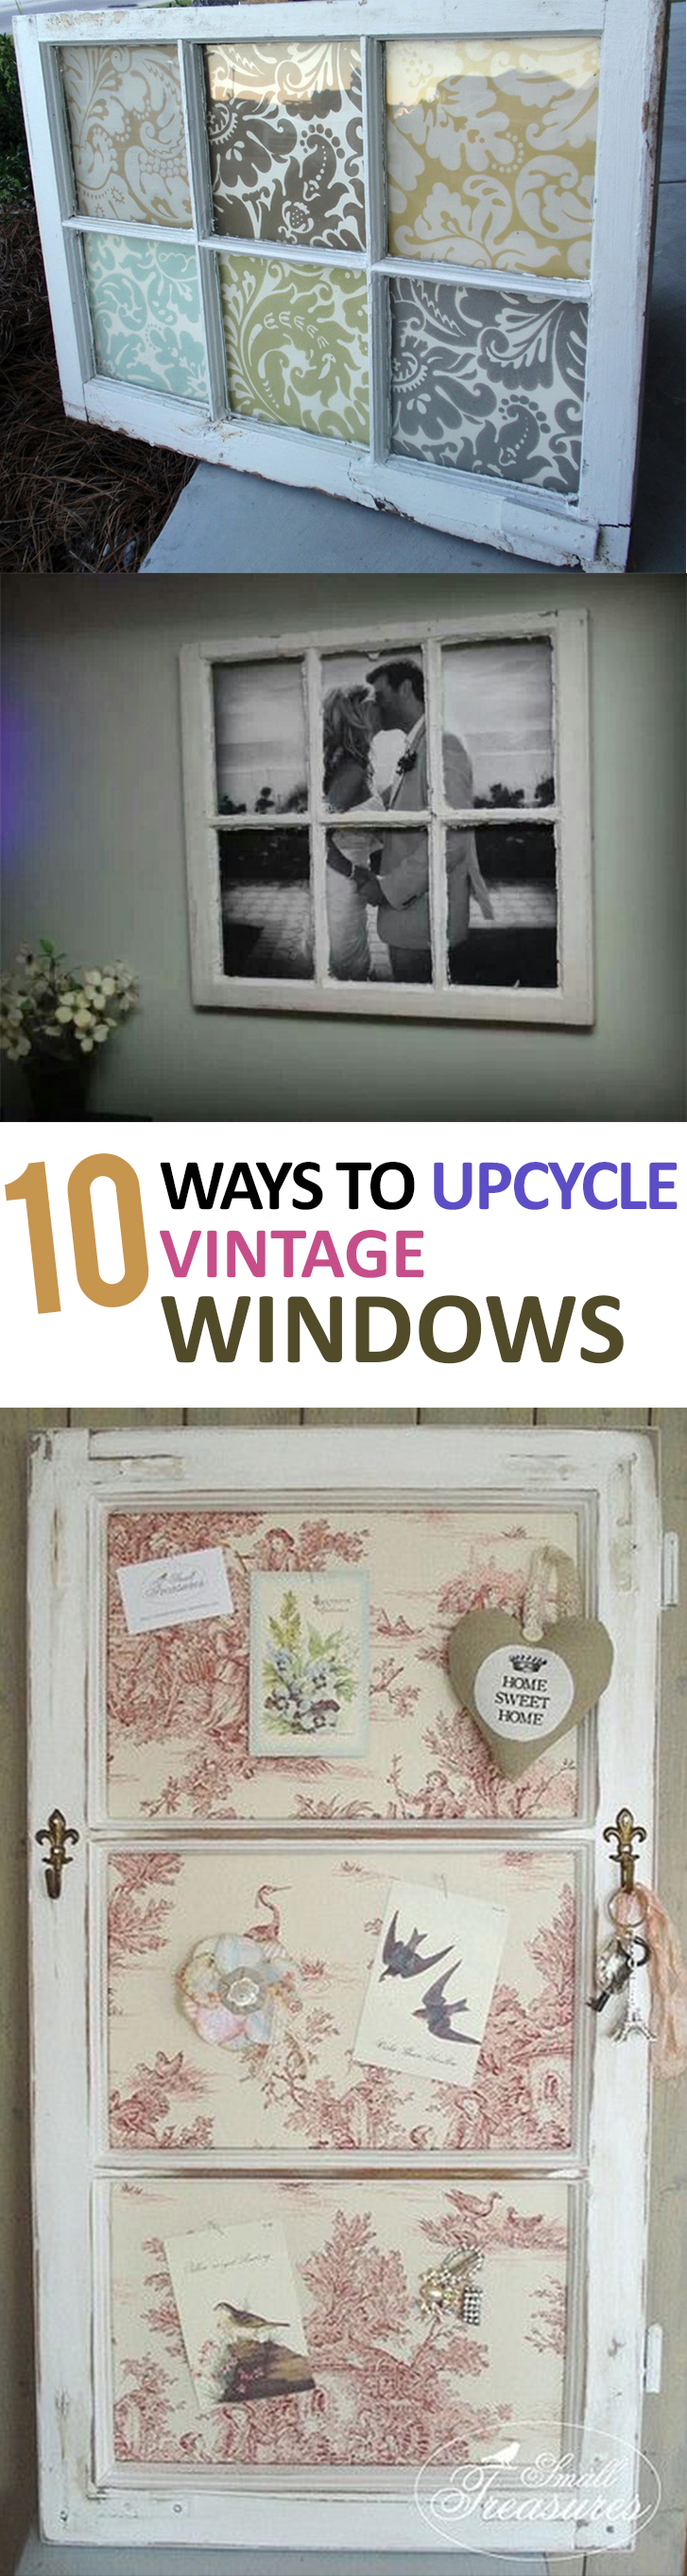 10 Ways to Upcycle Vintage Windows